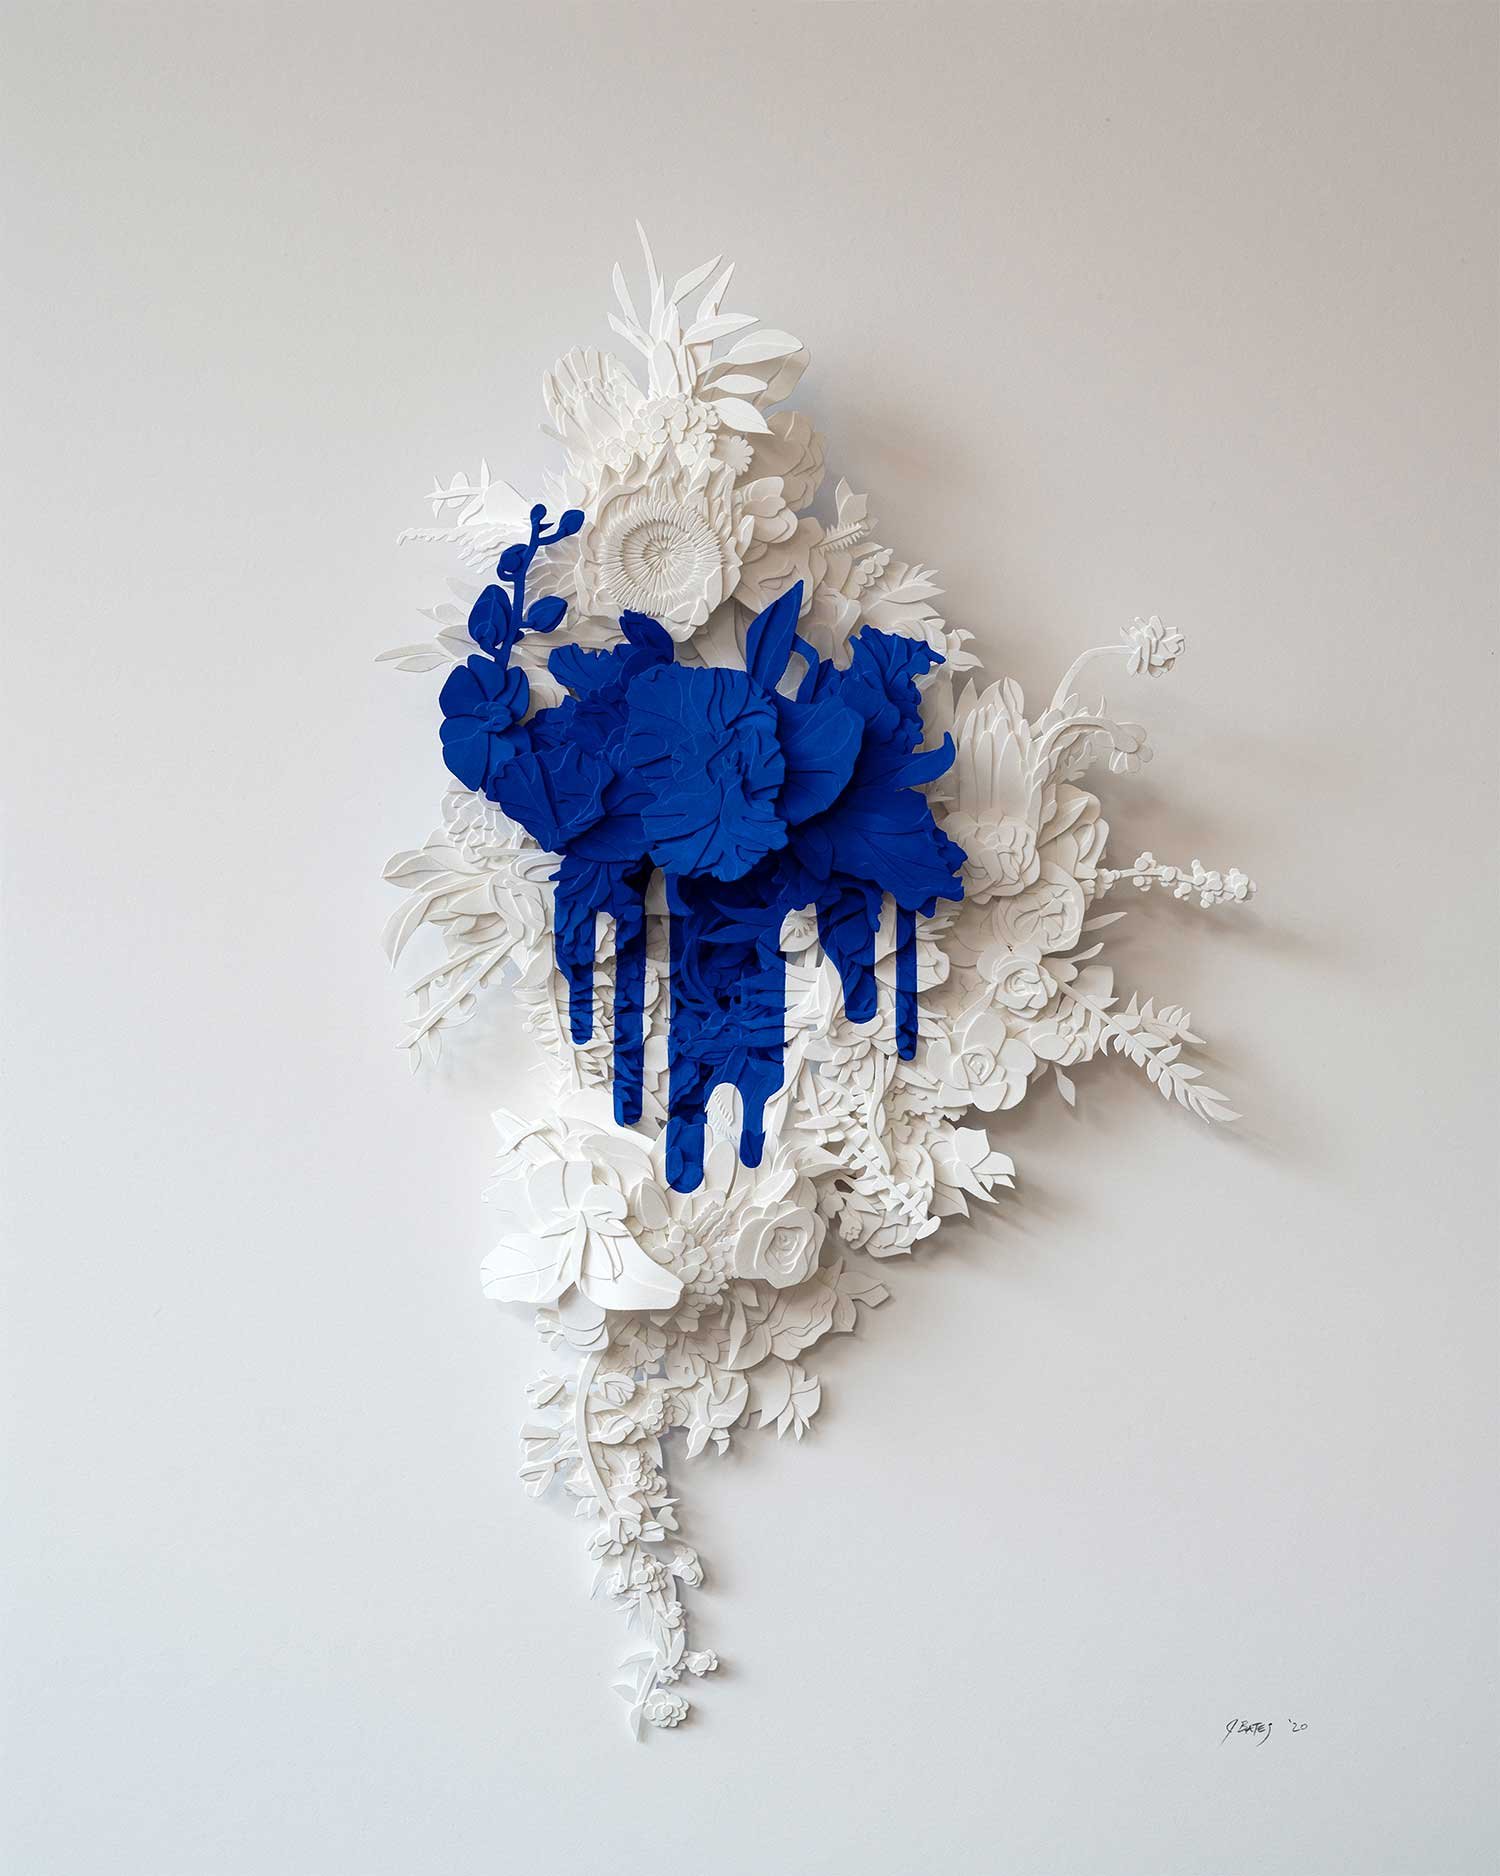 joey-bates-paper-art-sculpture-commission-3.jpg